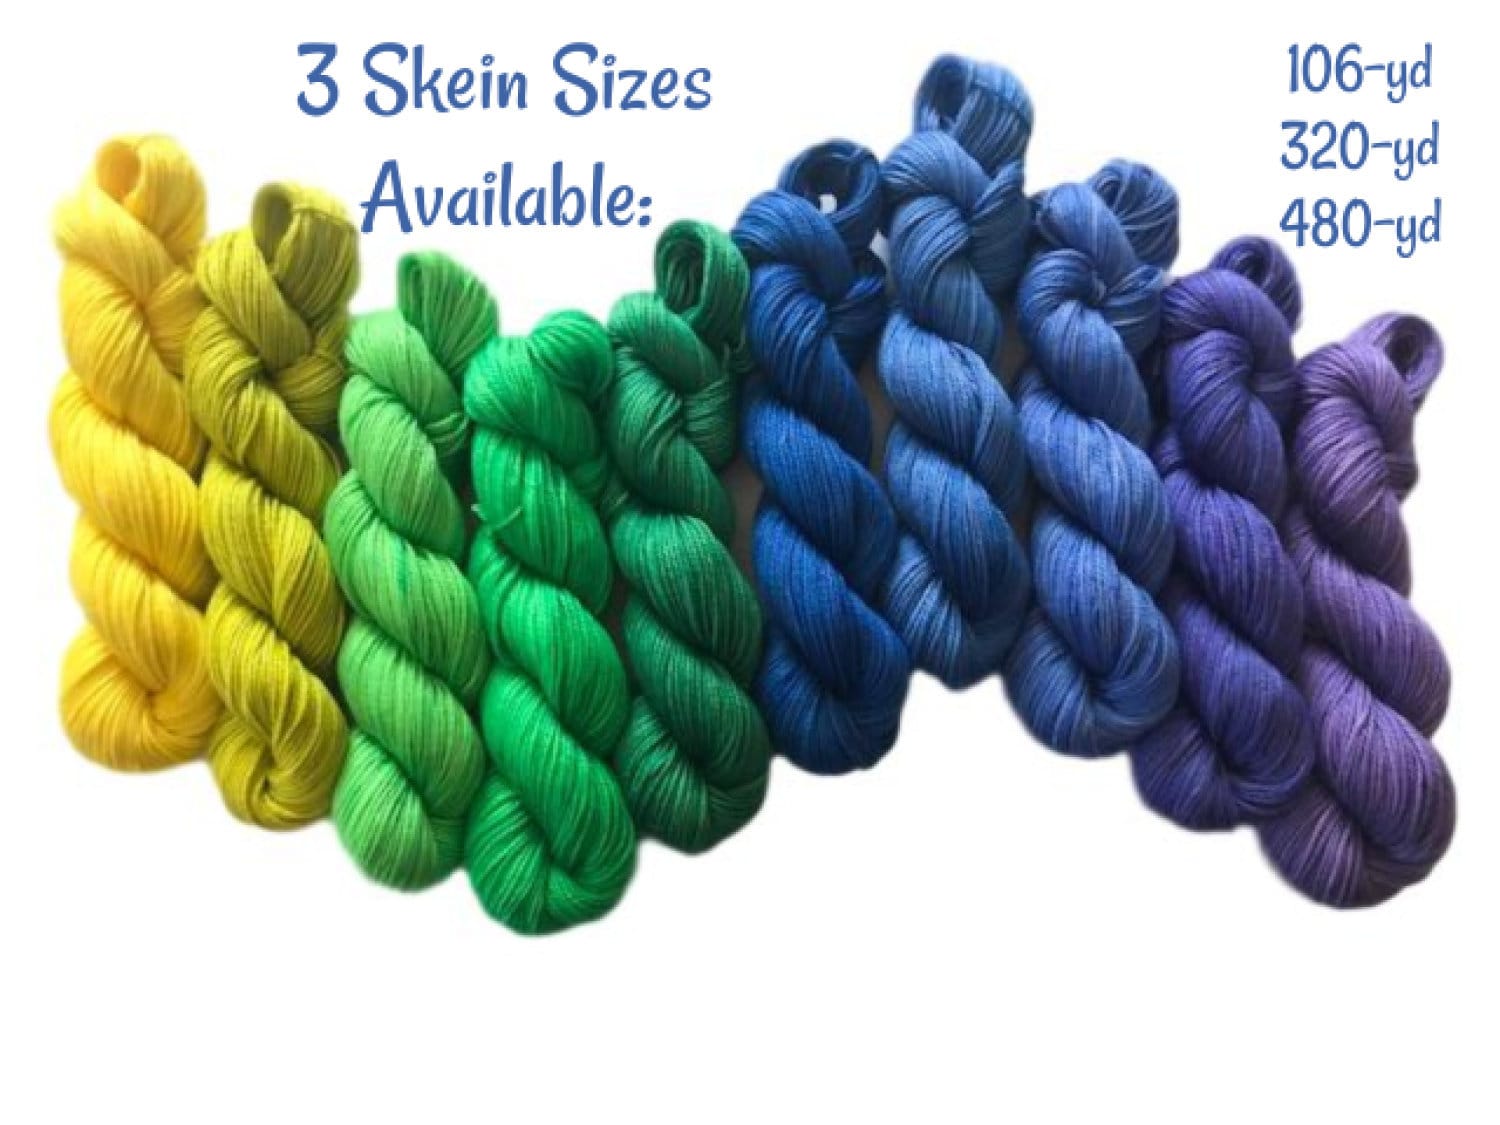 Vegan Gradient Yarn Kit - Hand Dyed Fingering / Sock Weight Mini Skeins - 10 Semi Solids / Tonals - Bamboo Cotton Artisan 3 Ply Thread Kit